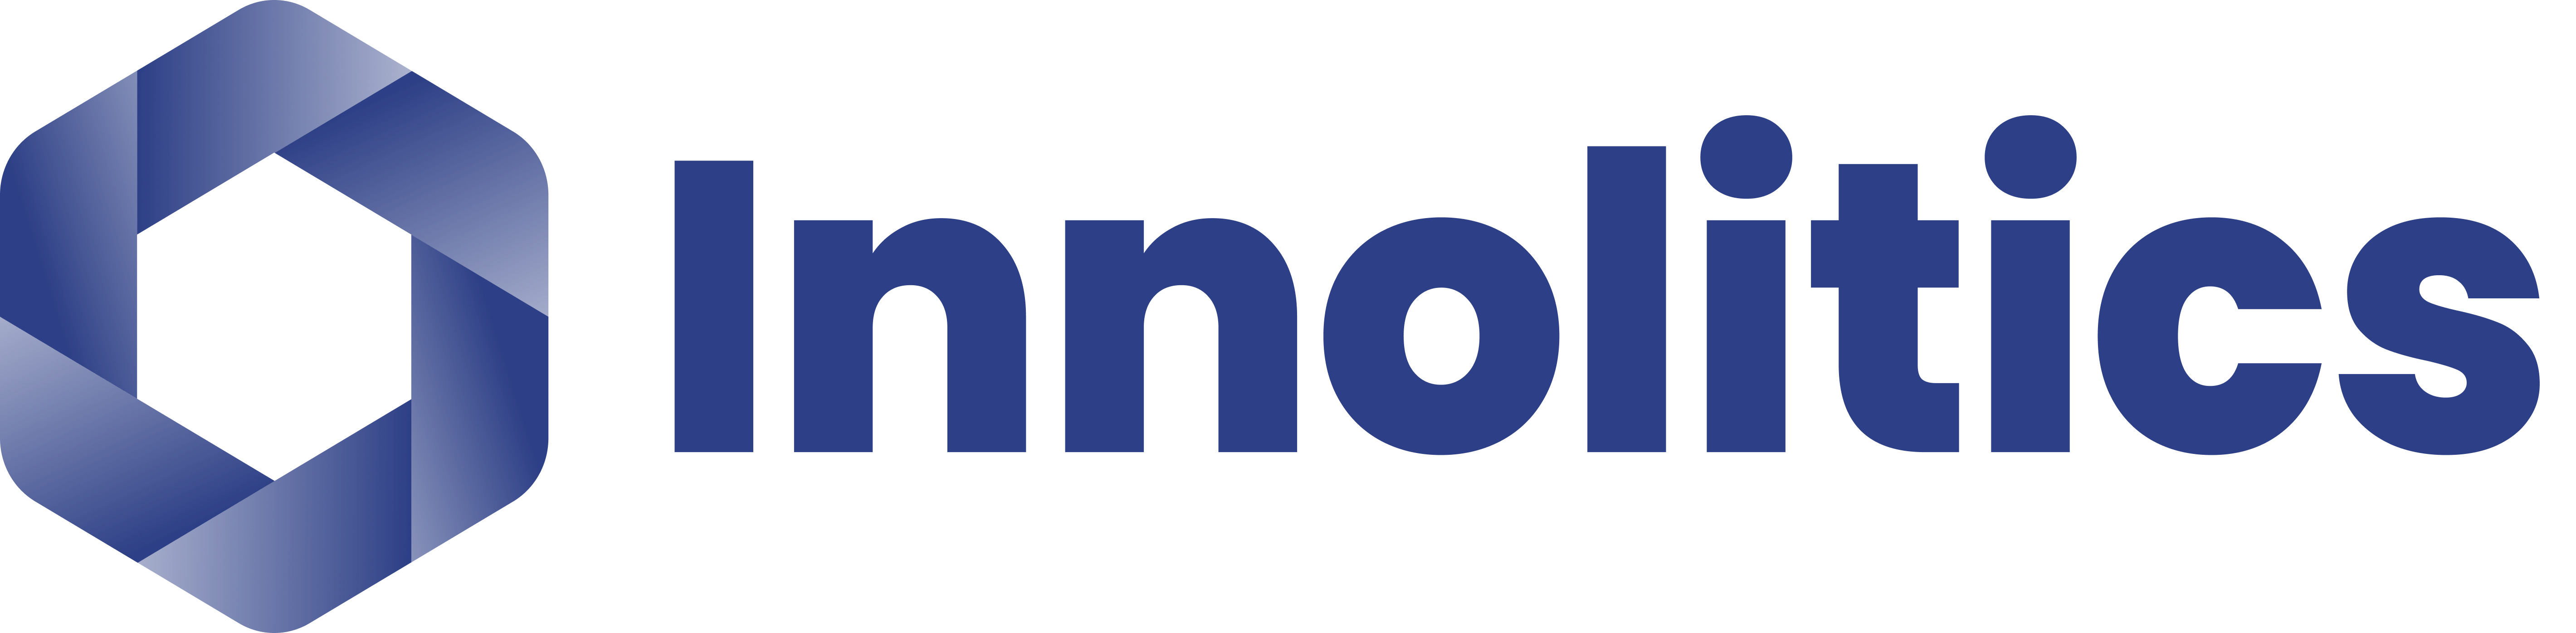 Innolitics Logo-1